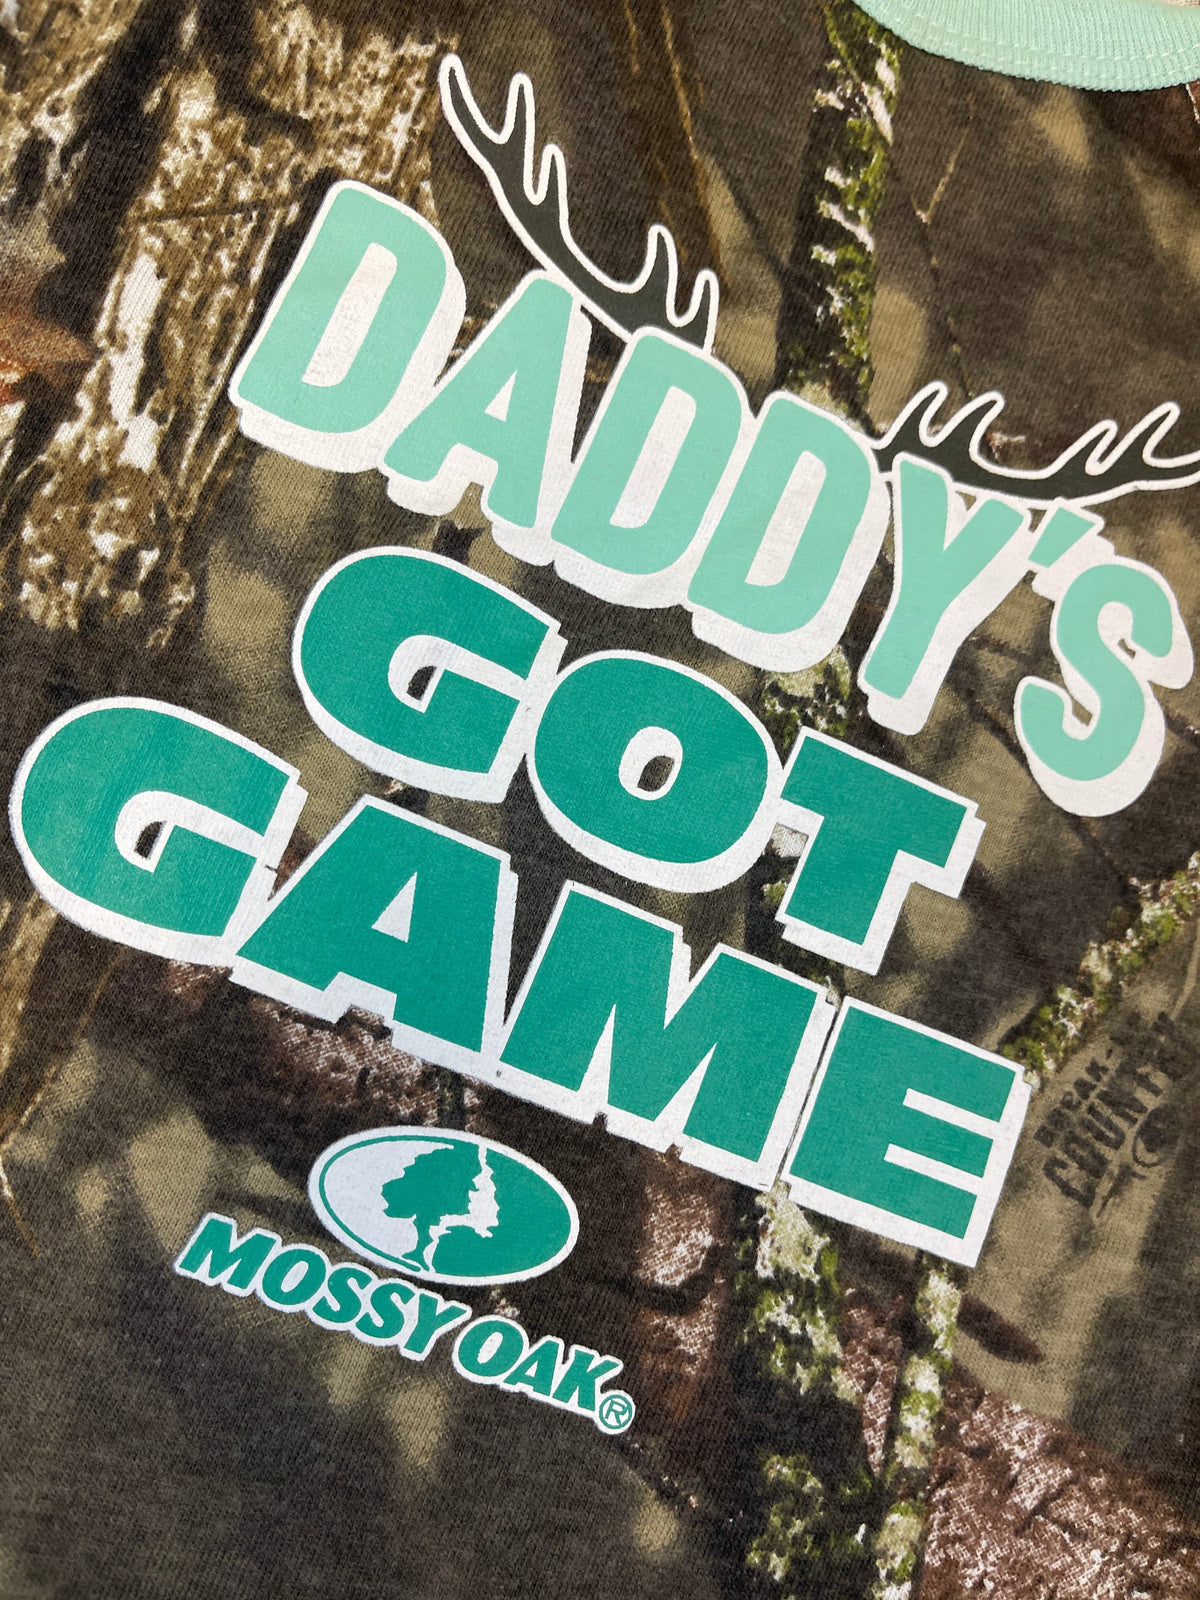 Mossy Oak Camo "Daddy's Got Game" Hunting Infant Bodysuit/Vest Toddler 18 Months